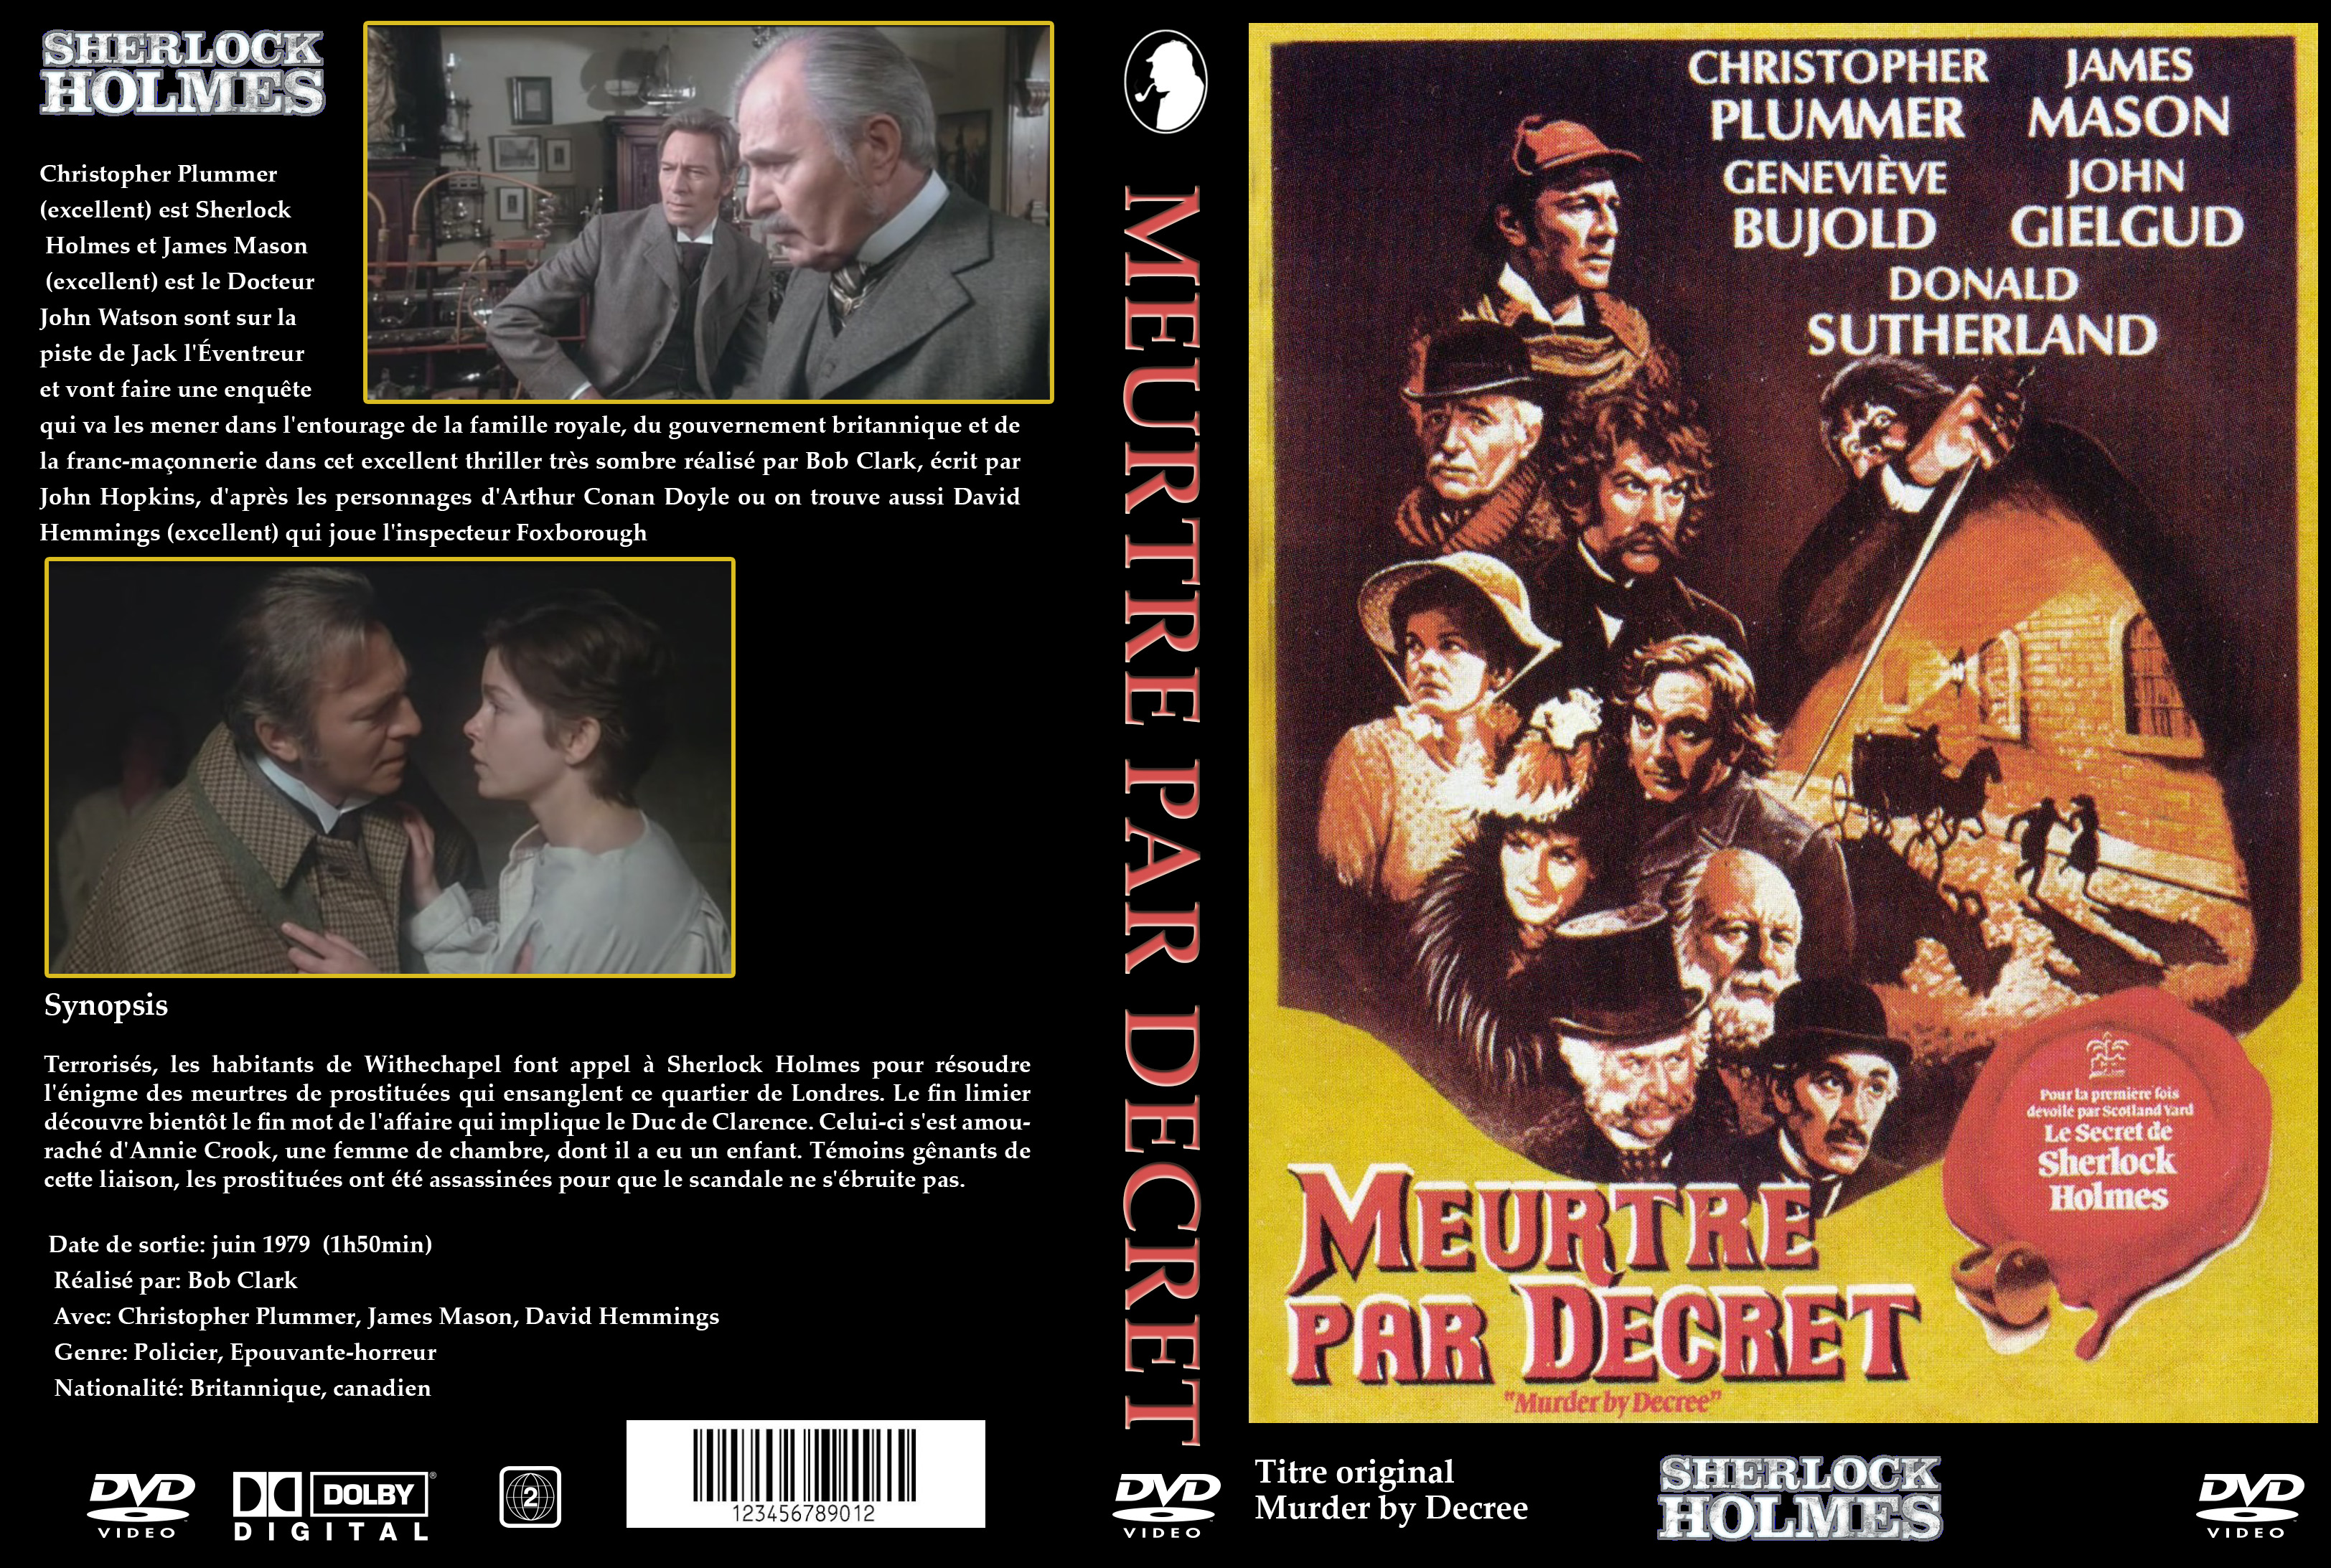 Jaquette DVD Sherlock Holmes - Meurtre par decret custom